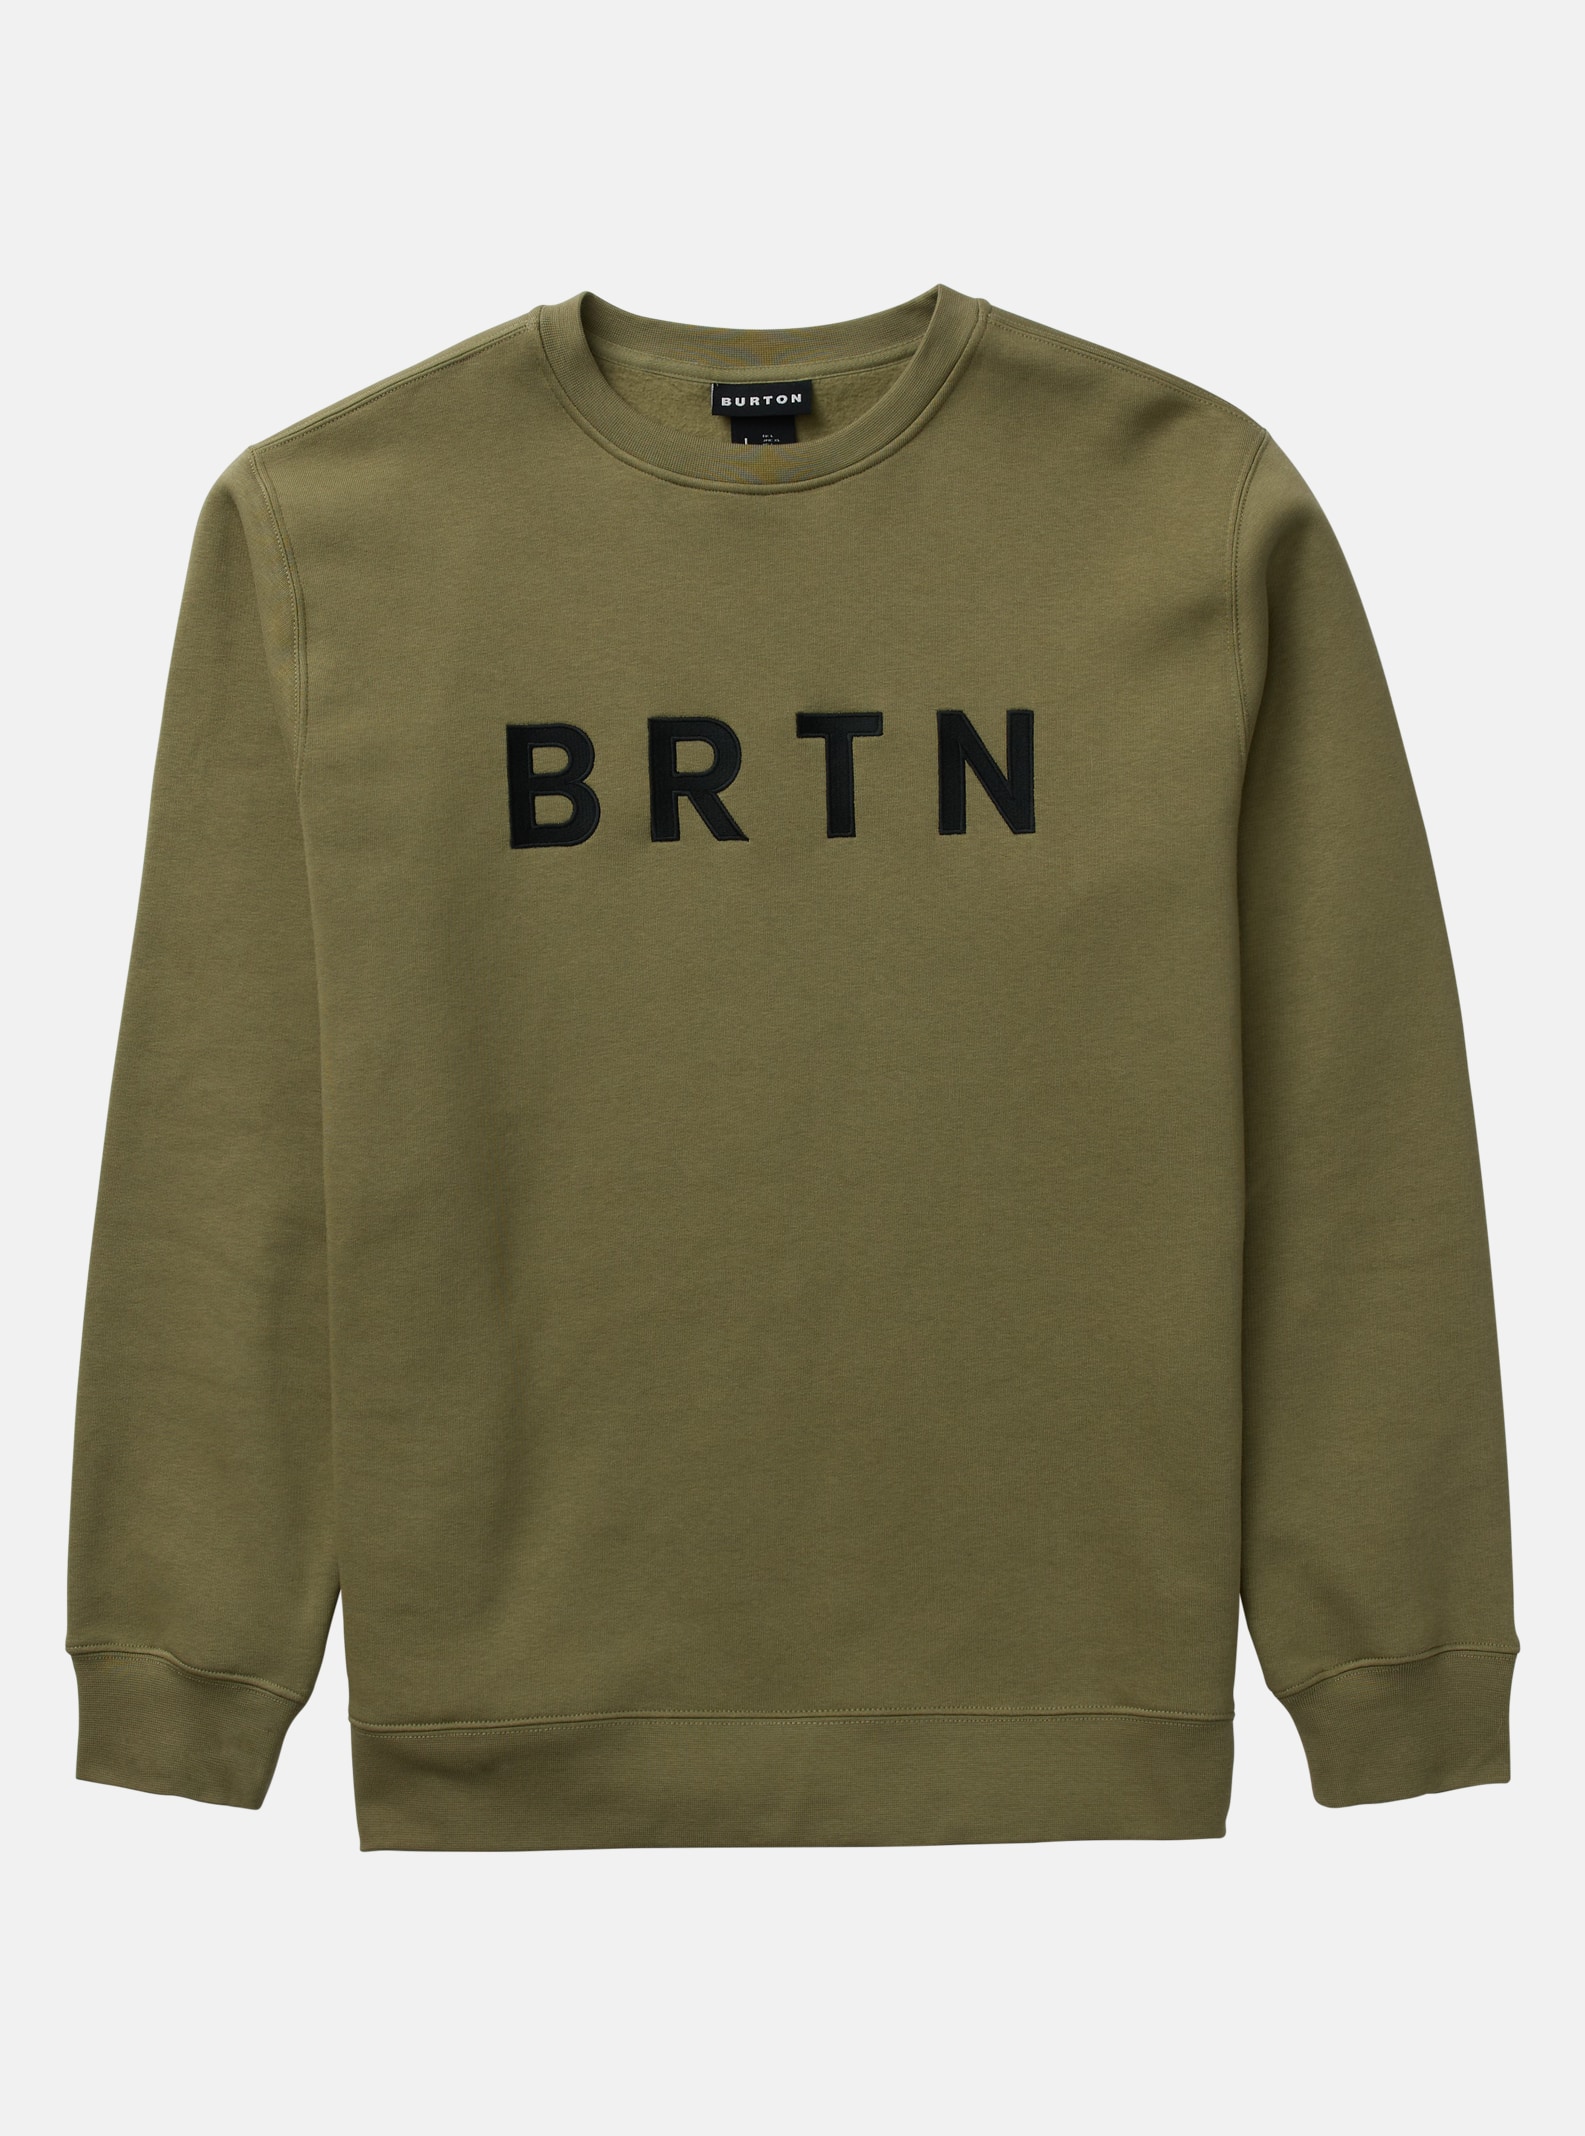 Burton Sweatshirt - BRTN Crewneck, Forest Moss, M